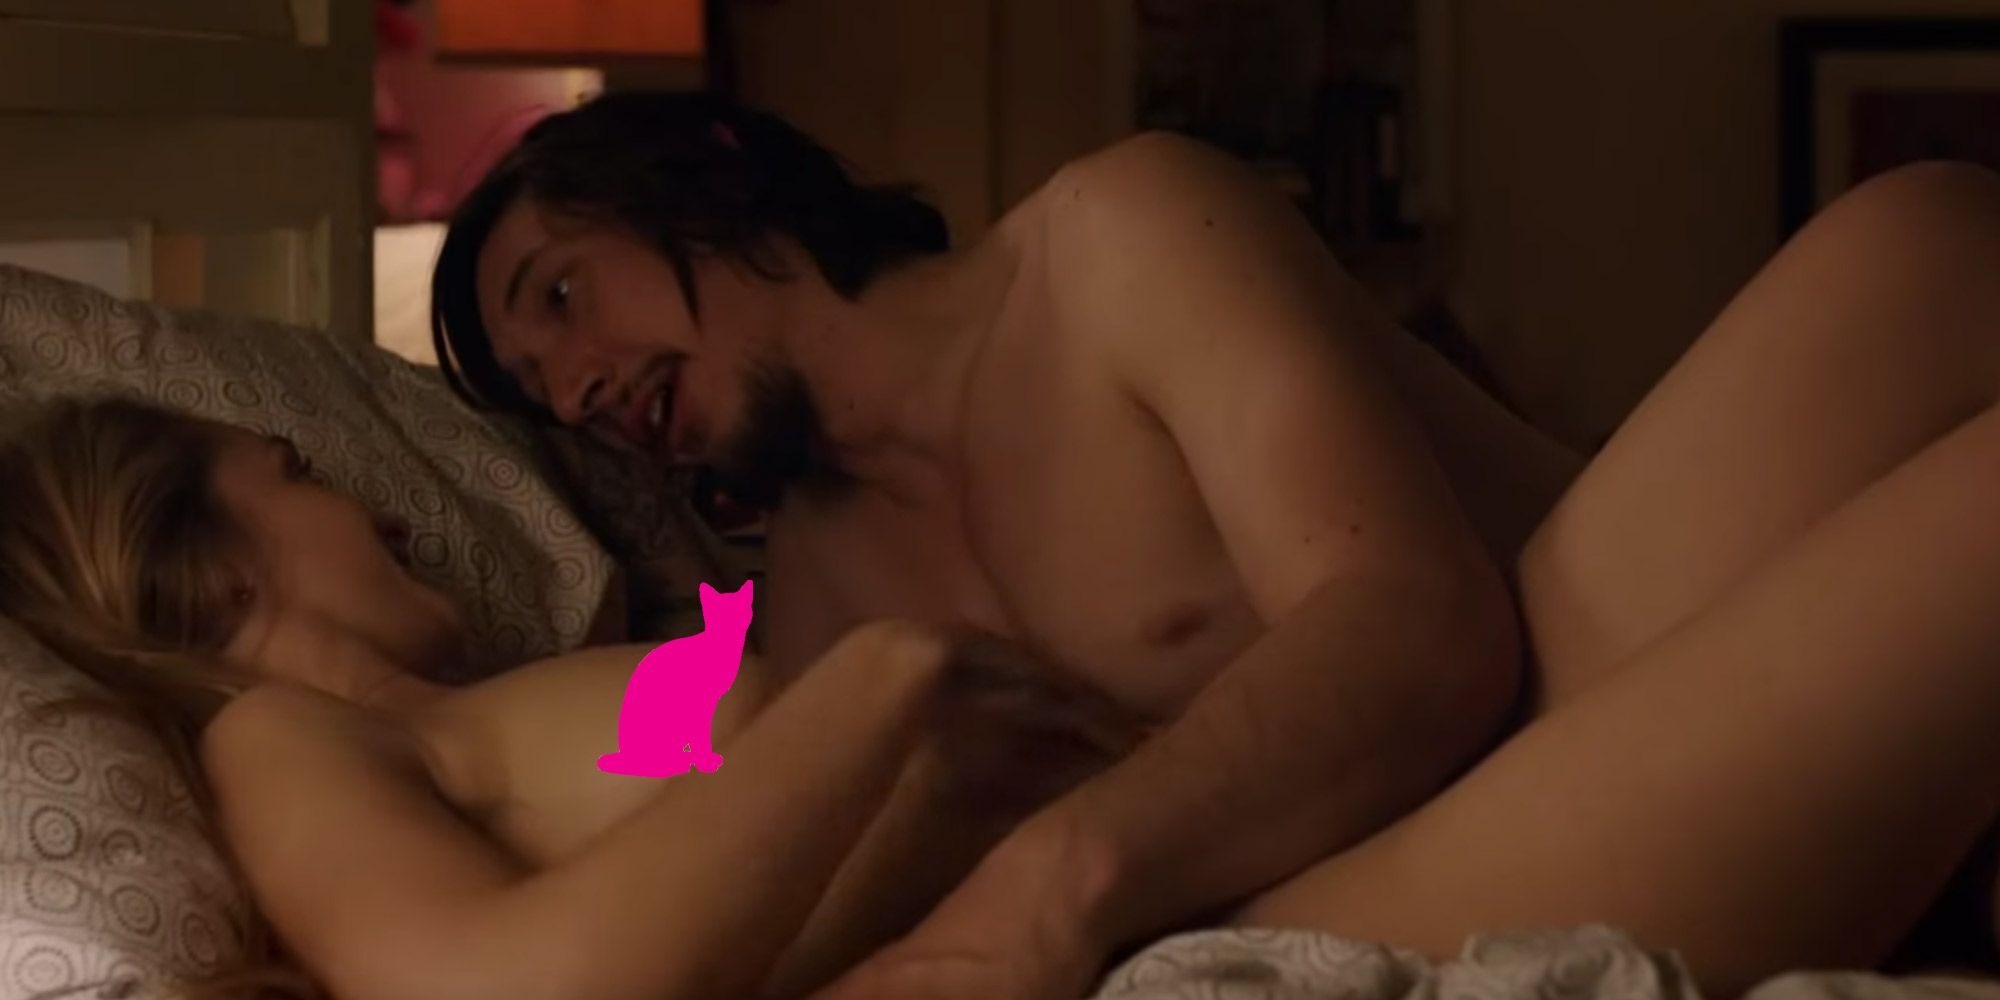 Hot sex scenes on tv